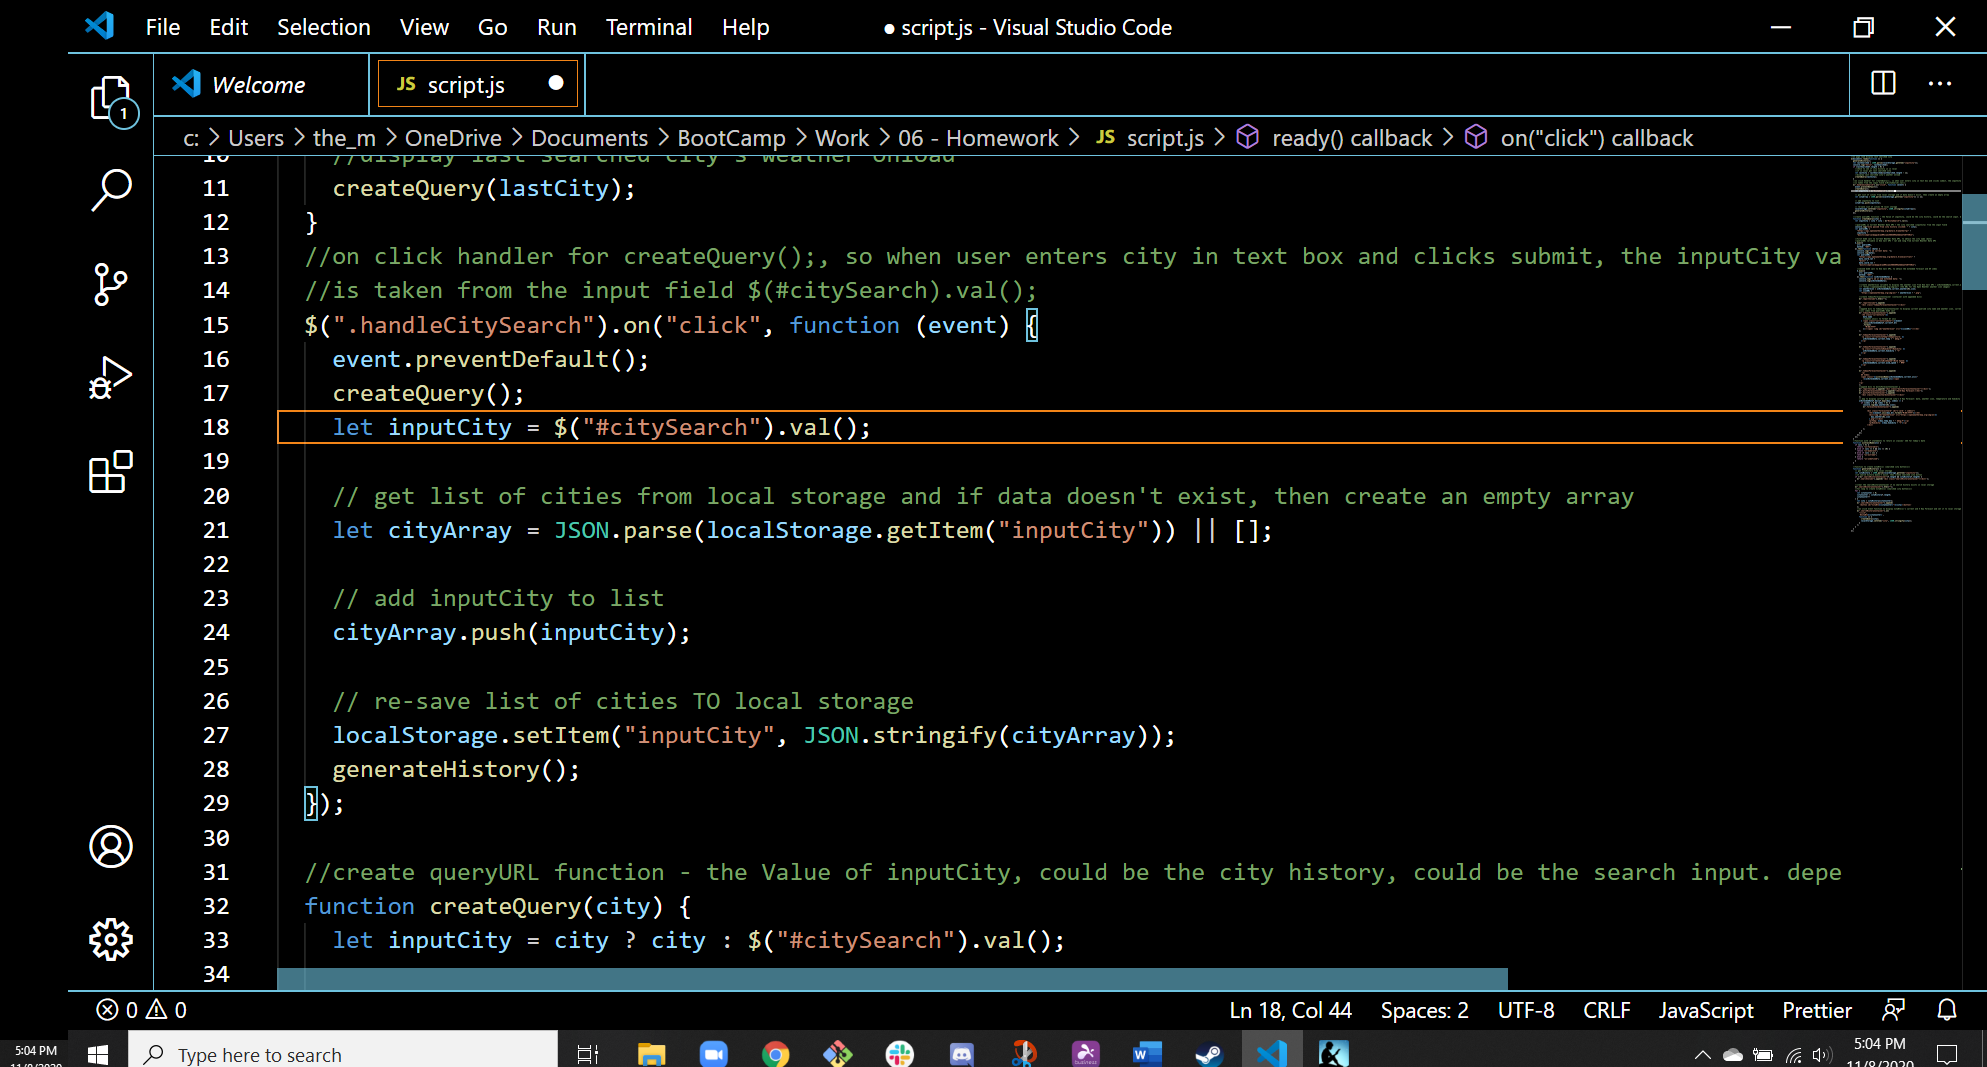 Screenshot of finalized JavaScript Code